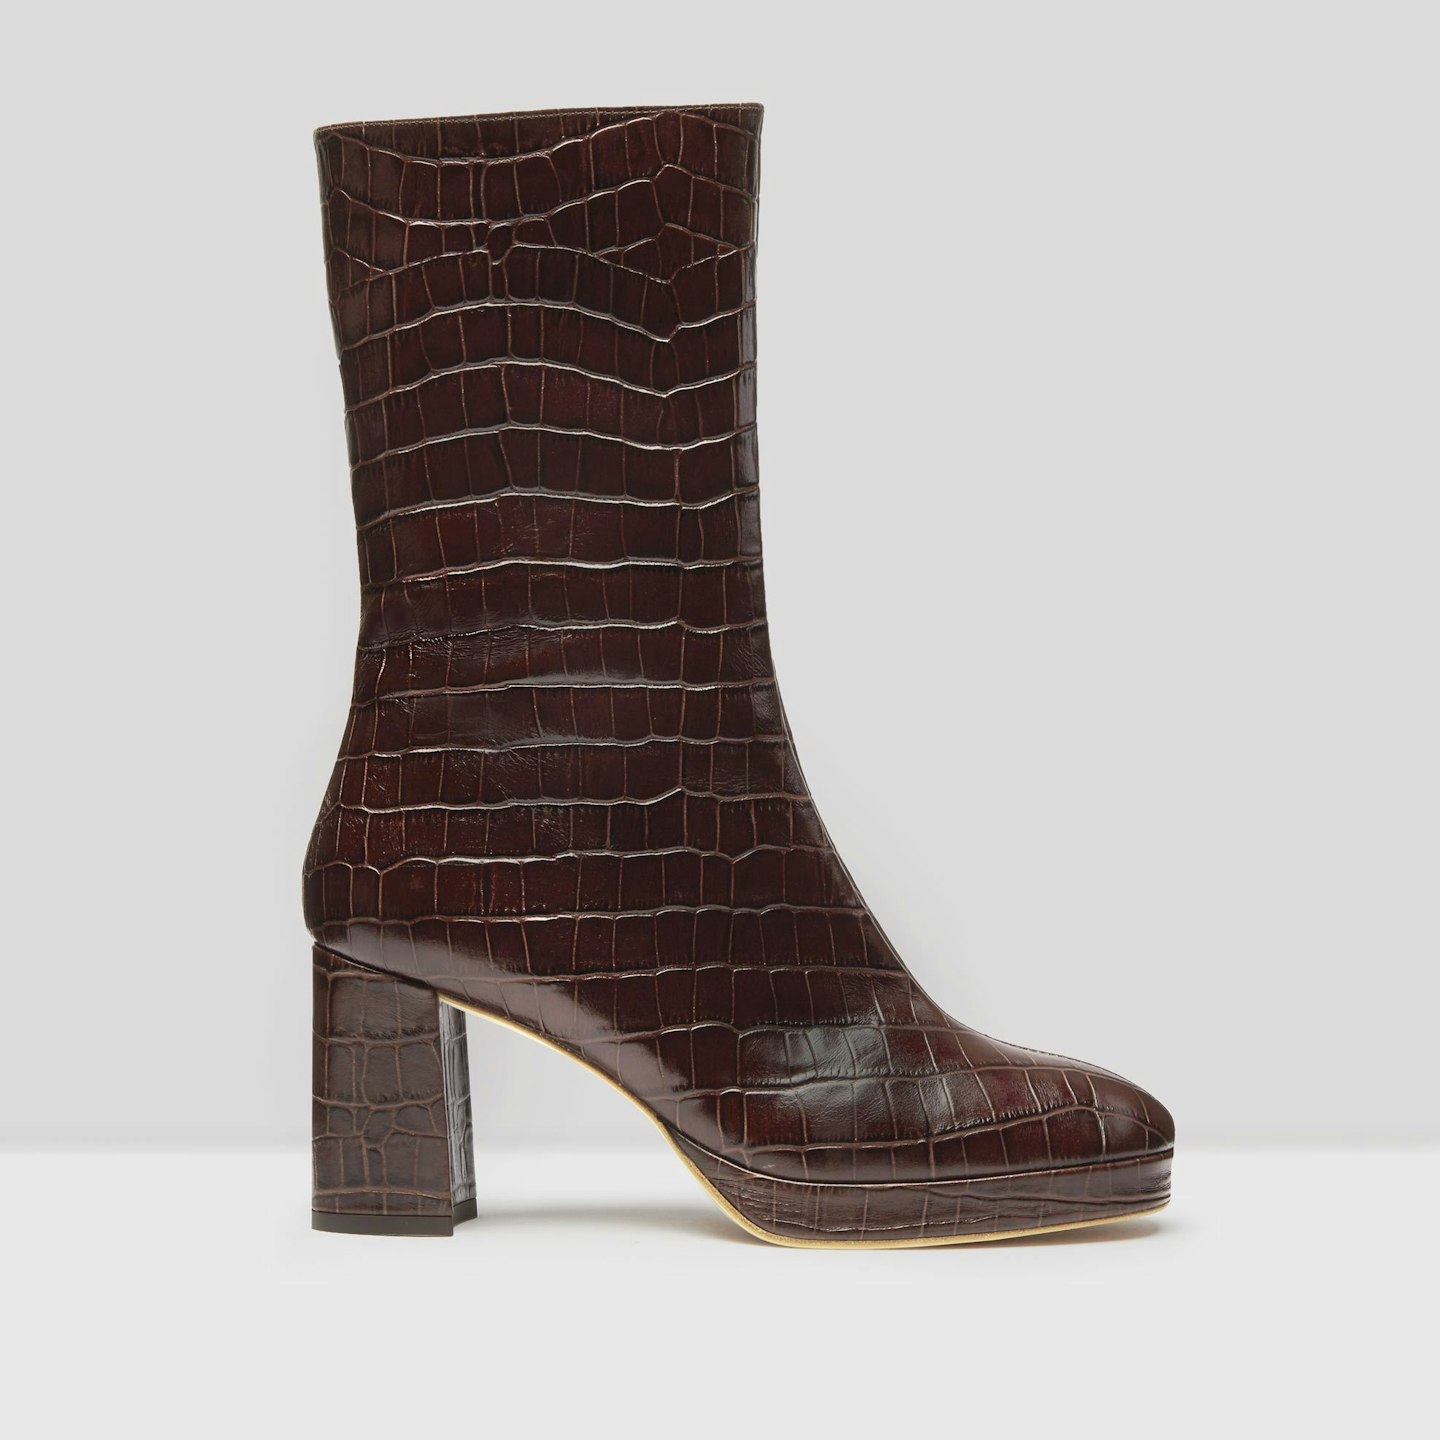 Miista, Carlota Mahogany Croc Leather Boots, £265